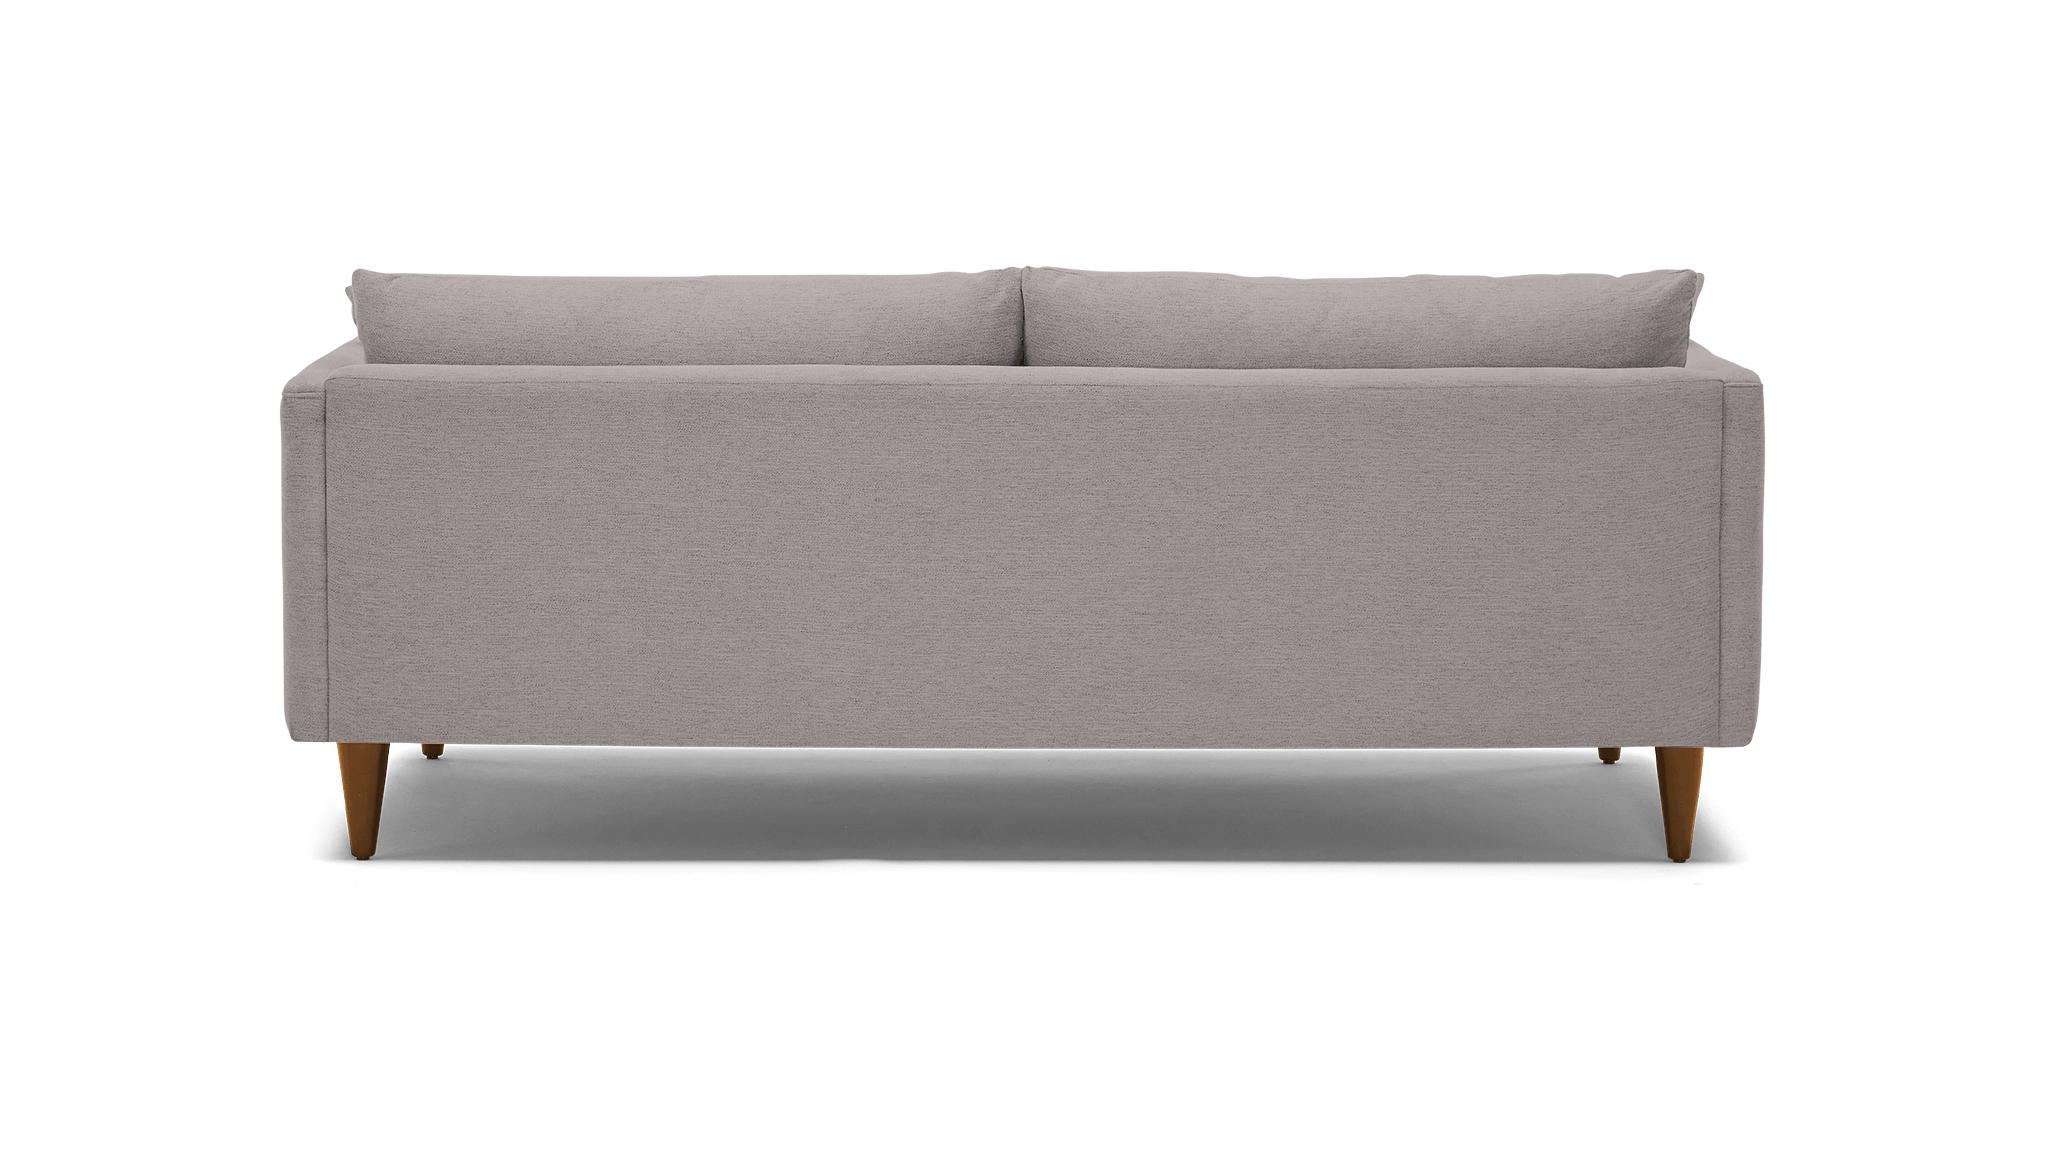 Lewis Mid Century Modern Sofa - Sunbrella Premier Wisteria - Mocha - Cone - Image 4